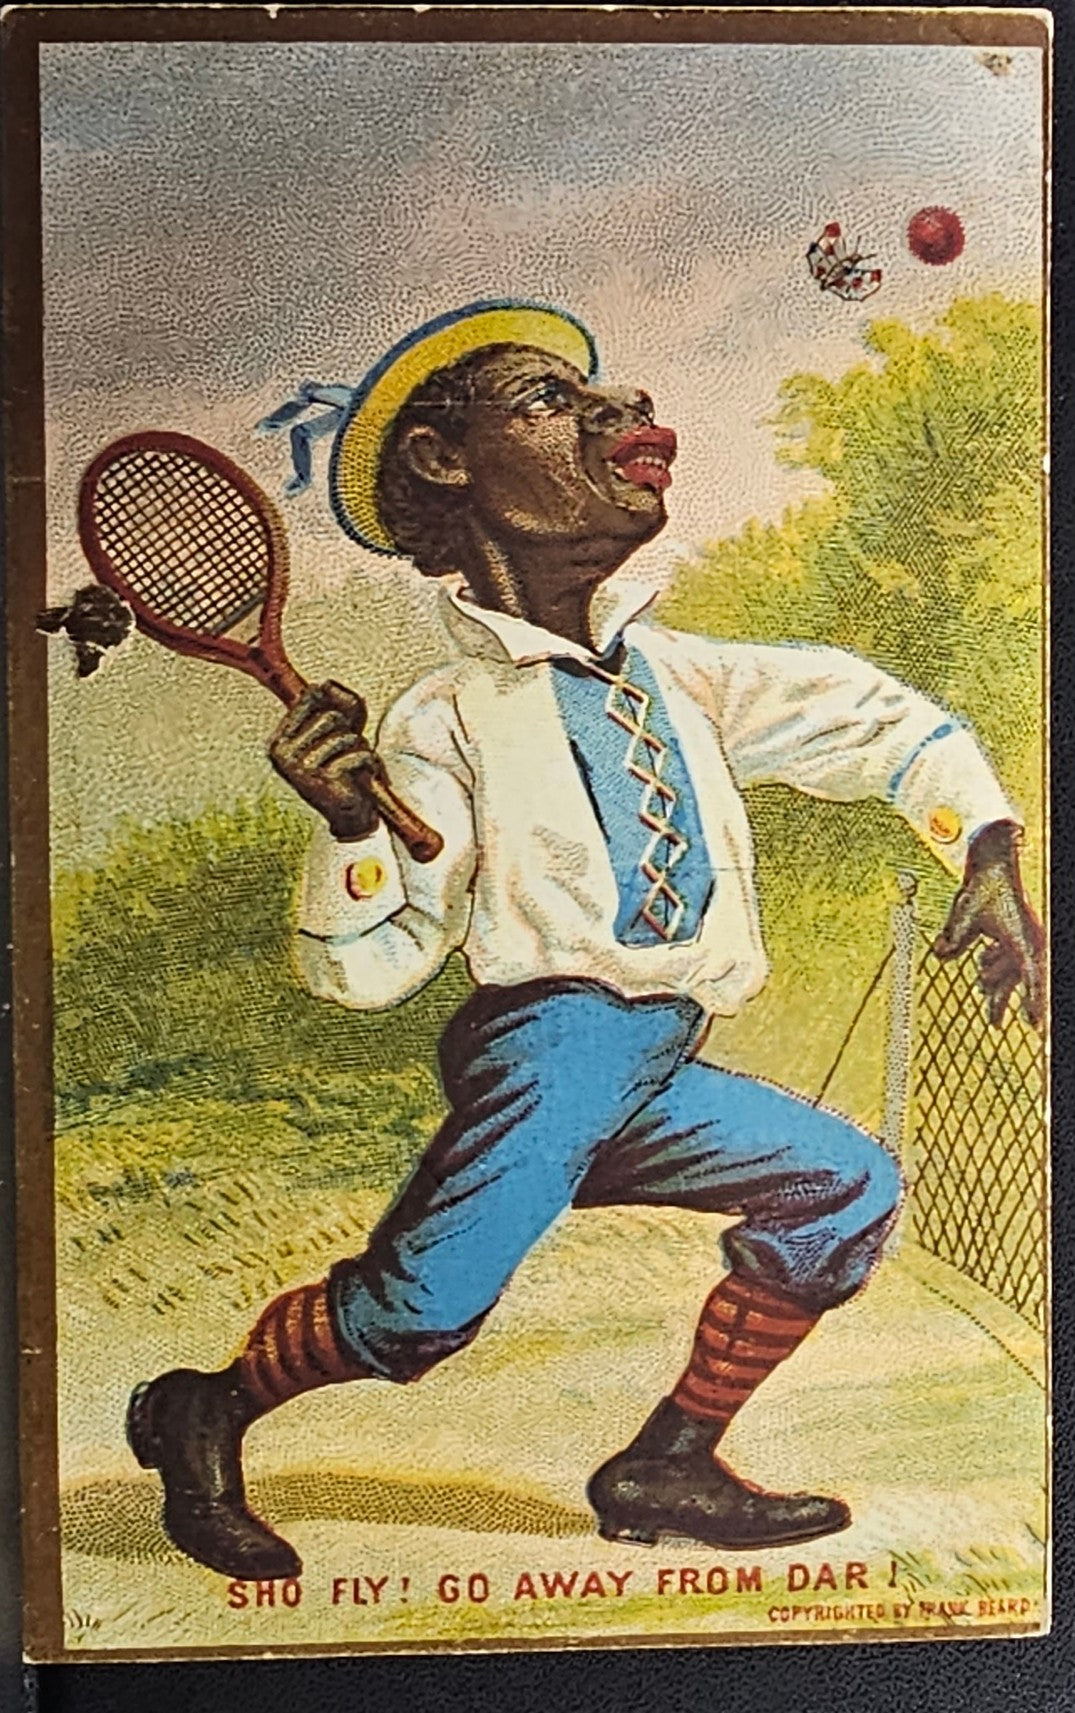 Black Americana Advertising Trade Card Frank Beard Illustration Sport Themed Man Playing Tennis